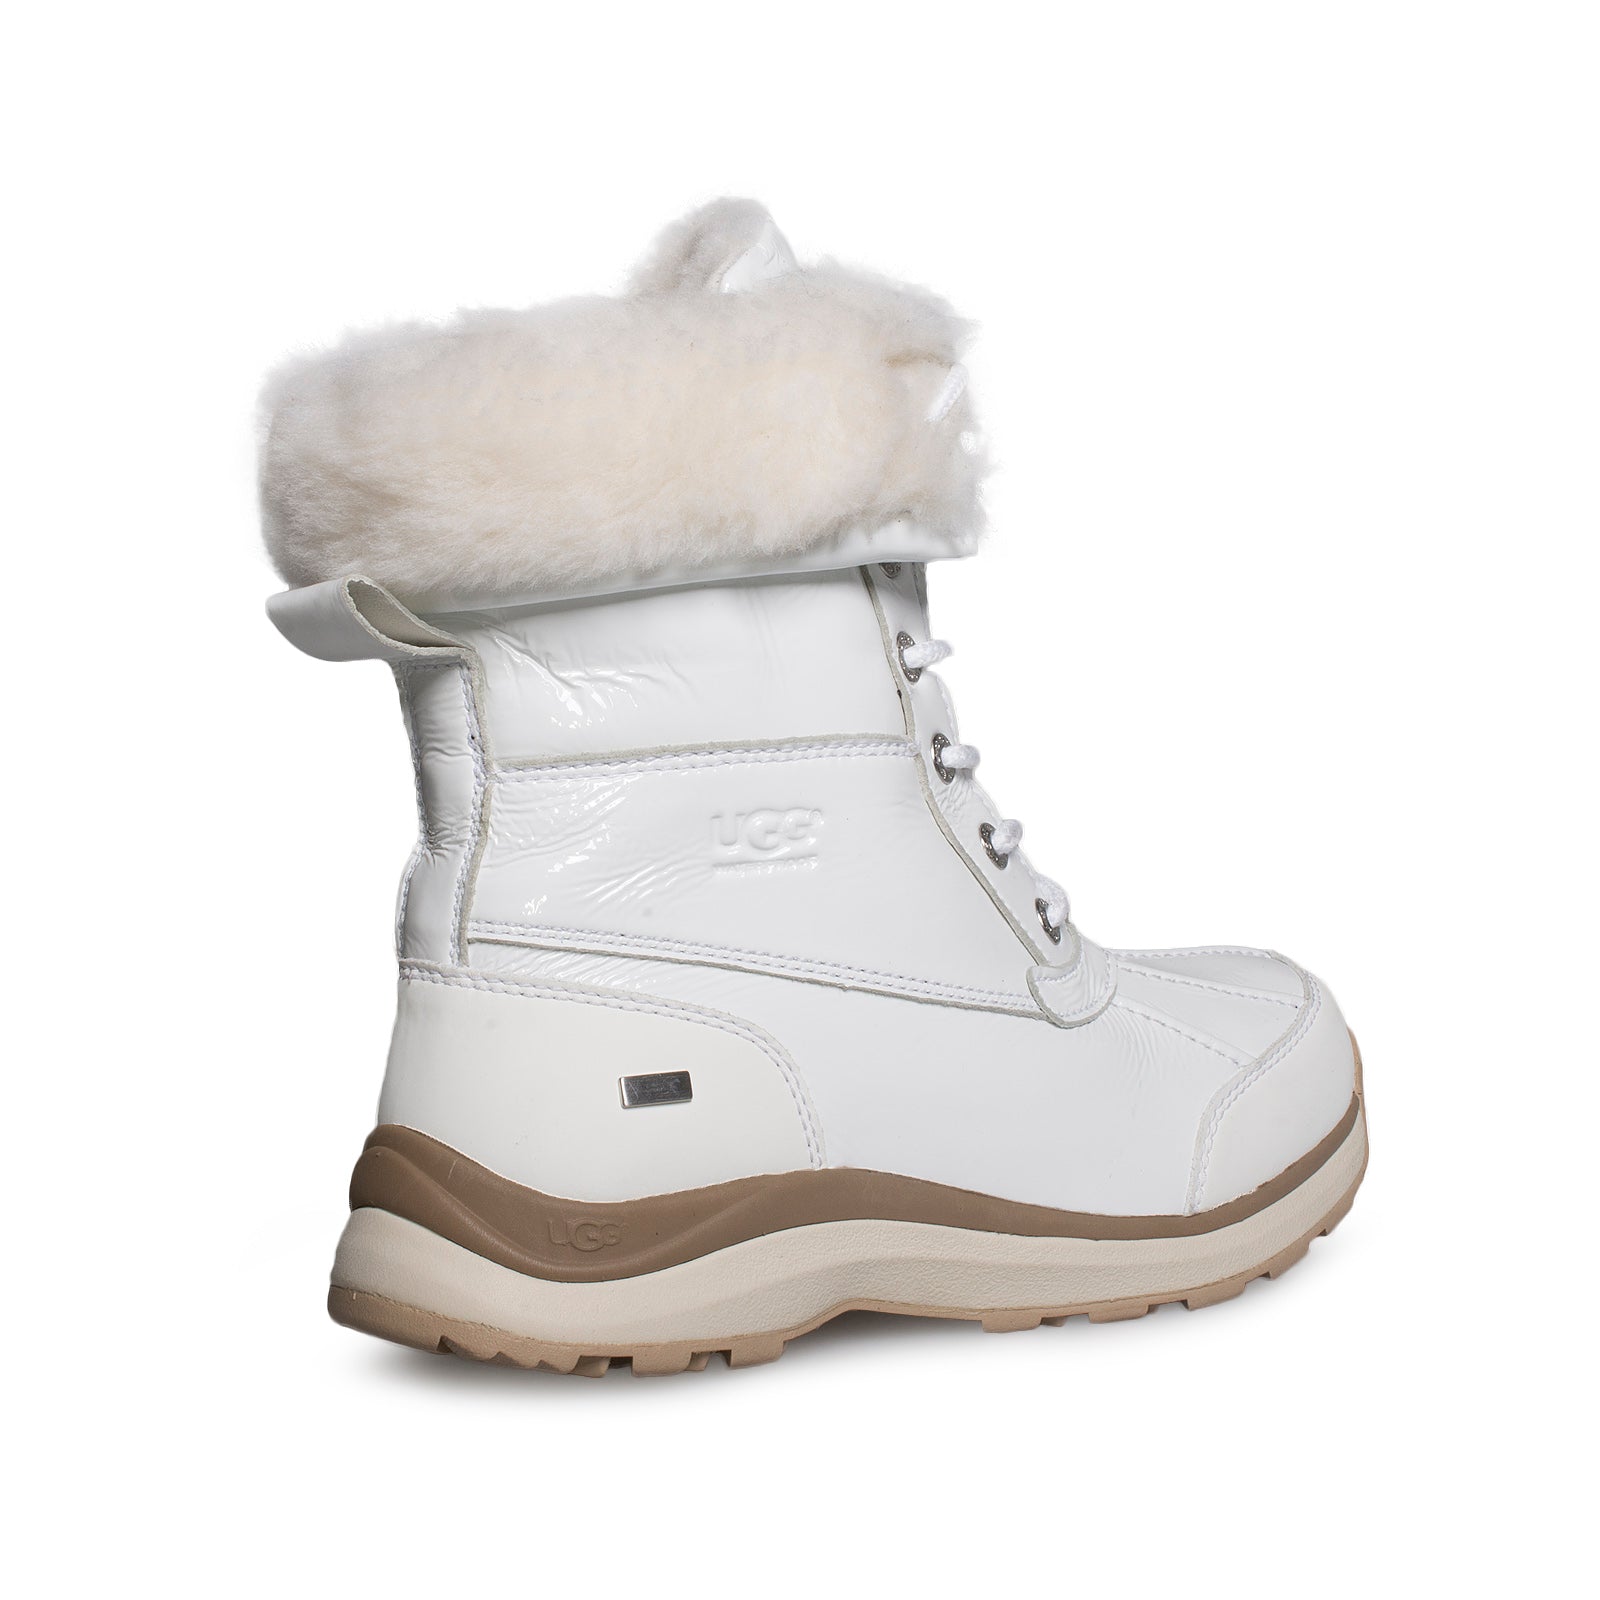 UGG Adirondack III Patent Leather White Boots - Women's - MyCozyBoots